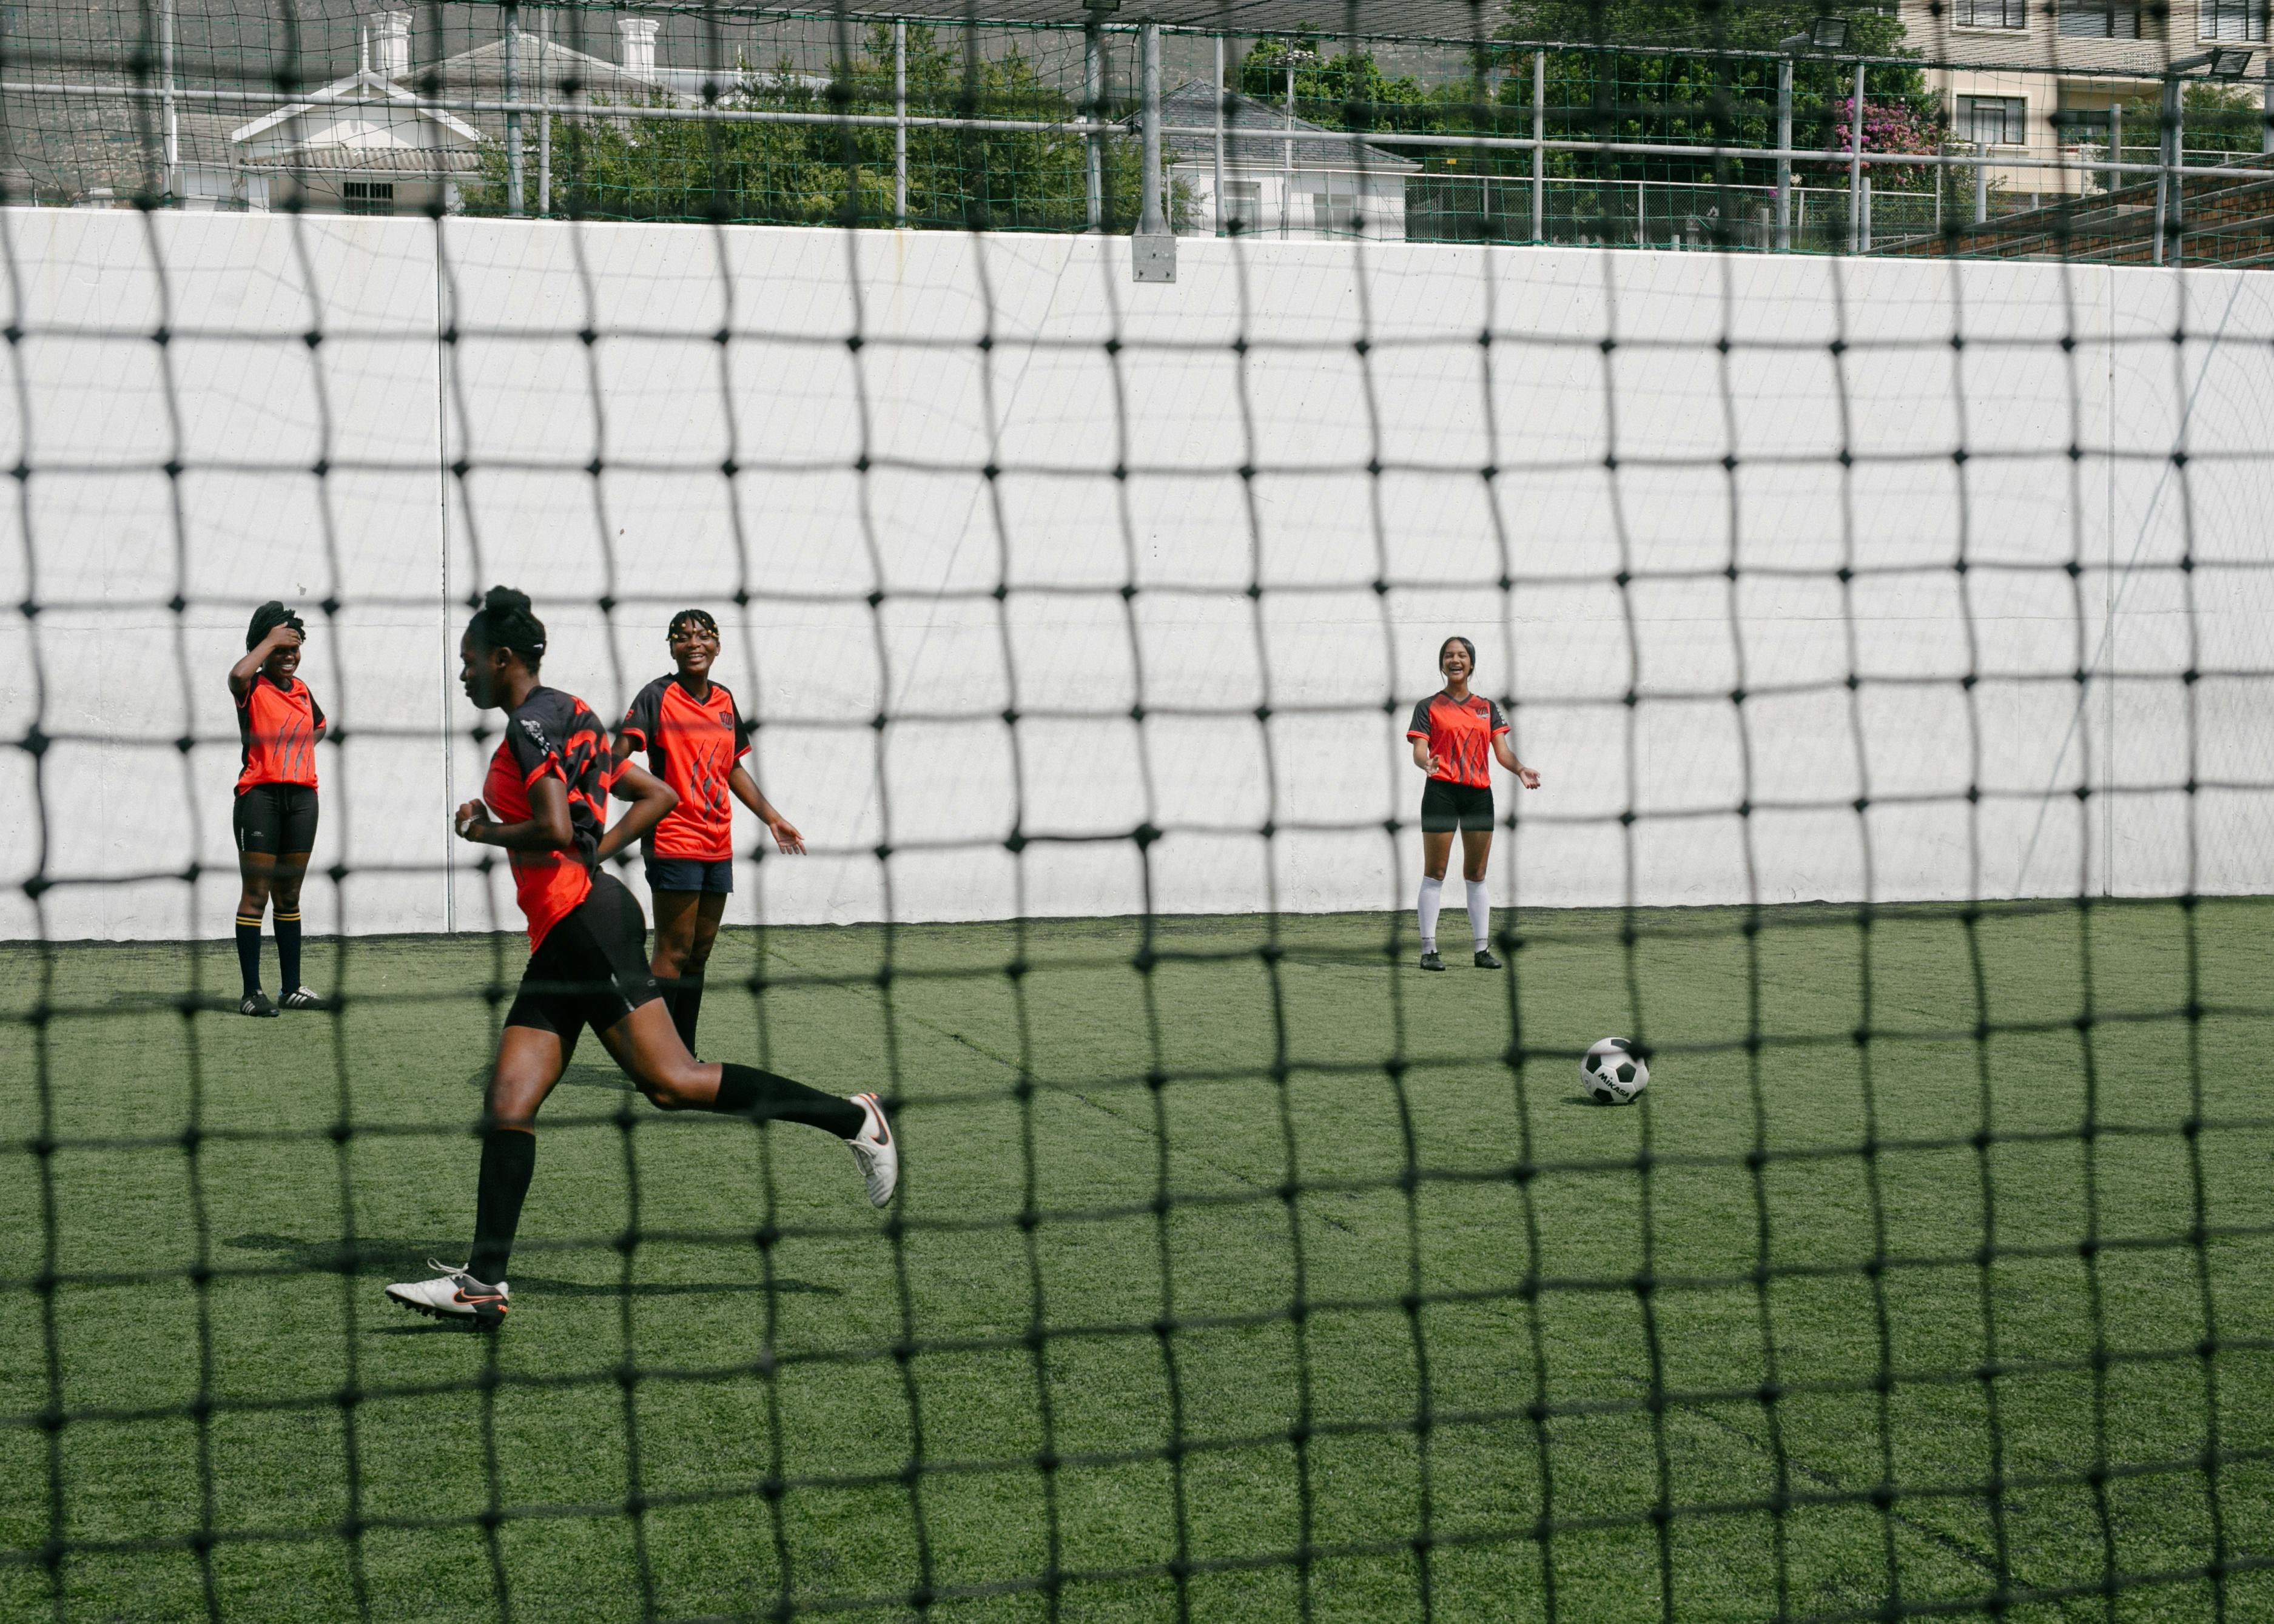 girls playing soccer on green grass field